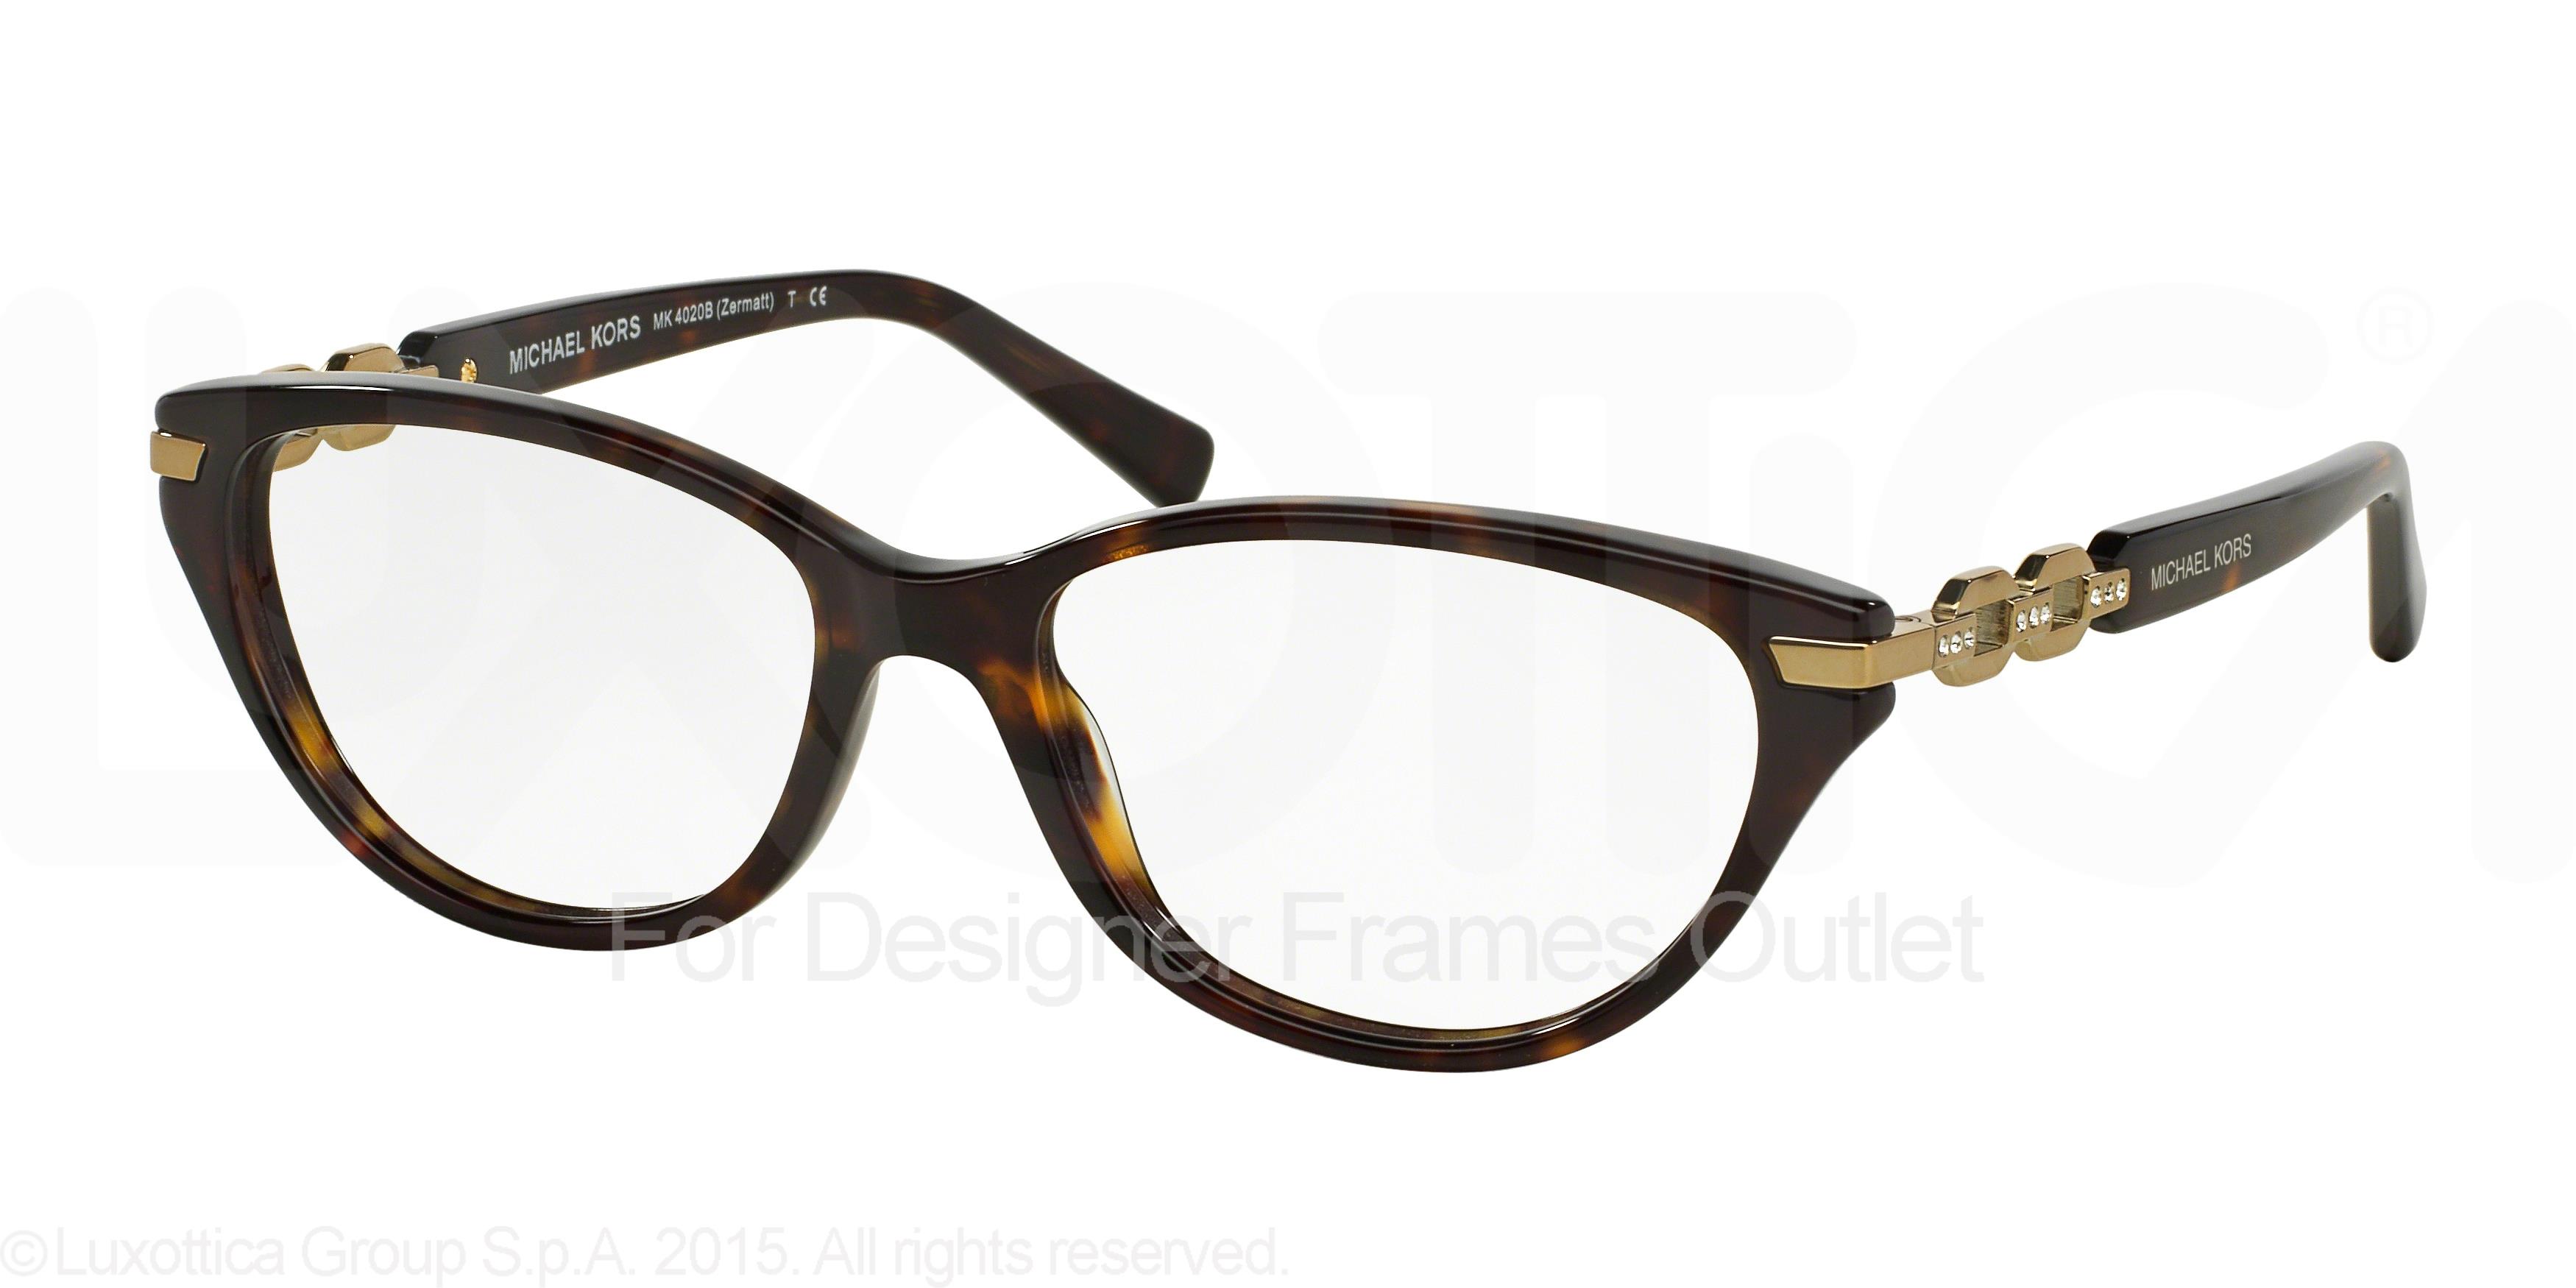 Designer Frames Outlet. Michael Kors Eyeglasses MK4020B